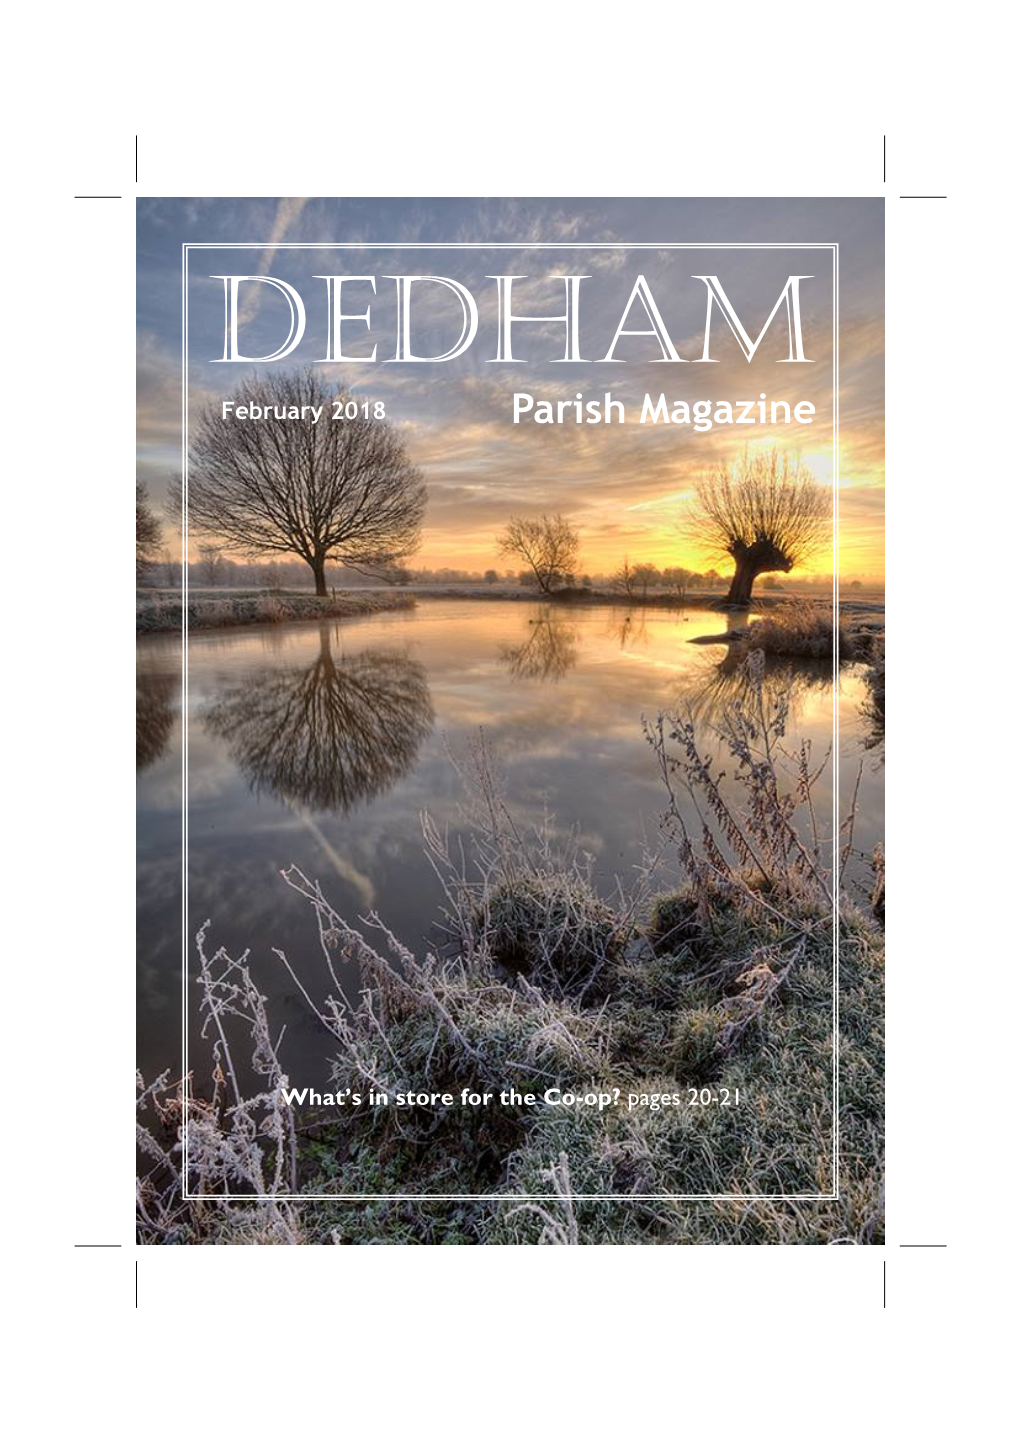 Dedham Parish Magazine First Published in 1876 February 2018